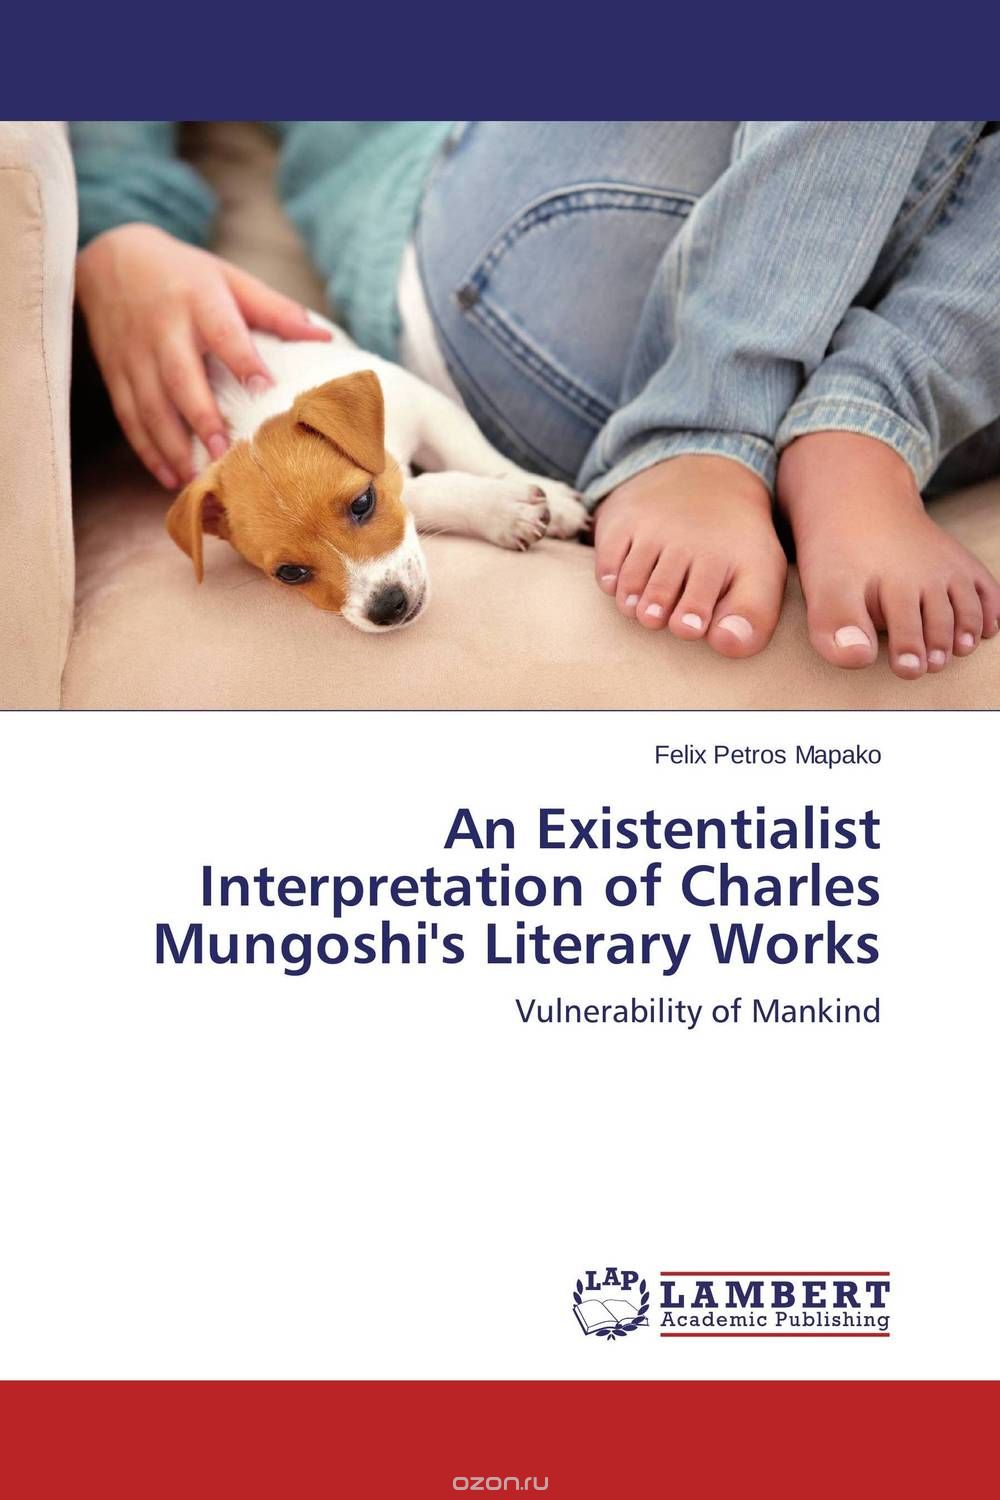 Скачать книгу "An Existentialist Interpretation of Charles Mungoshi's Literary Works"